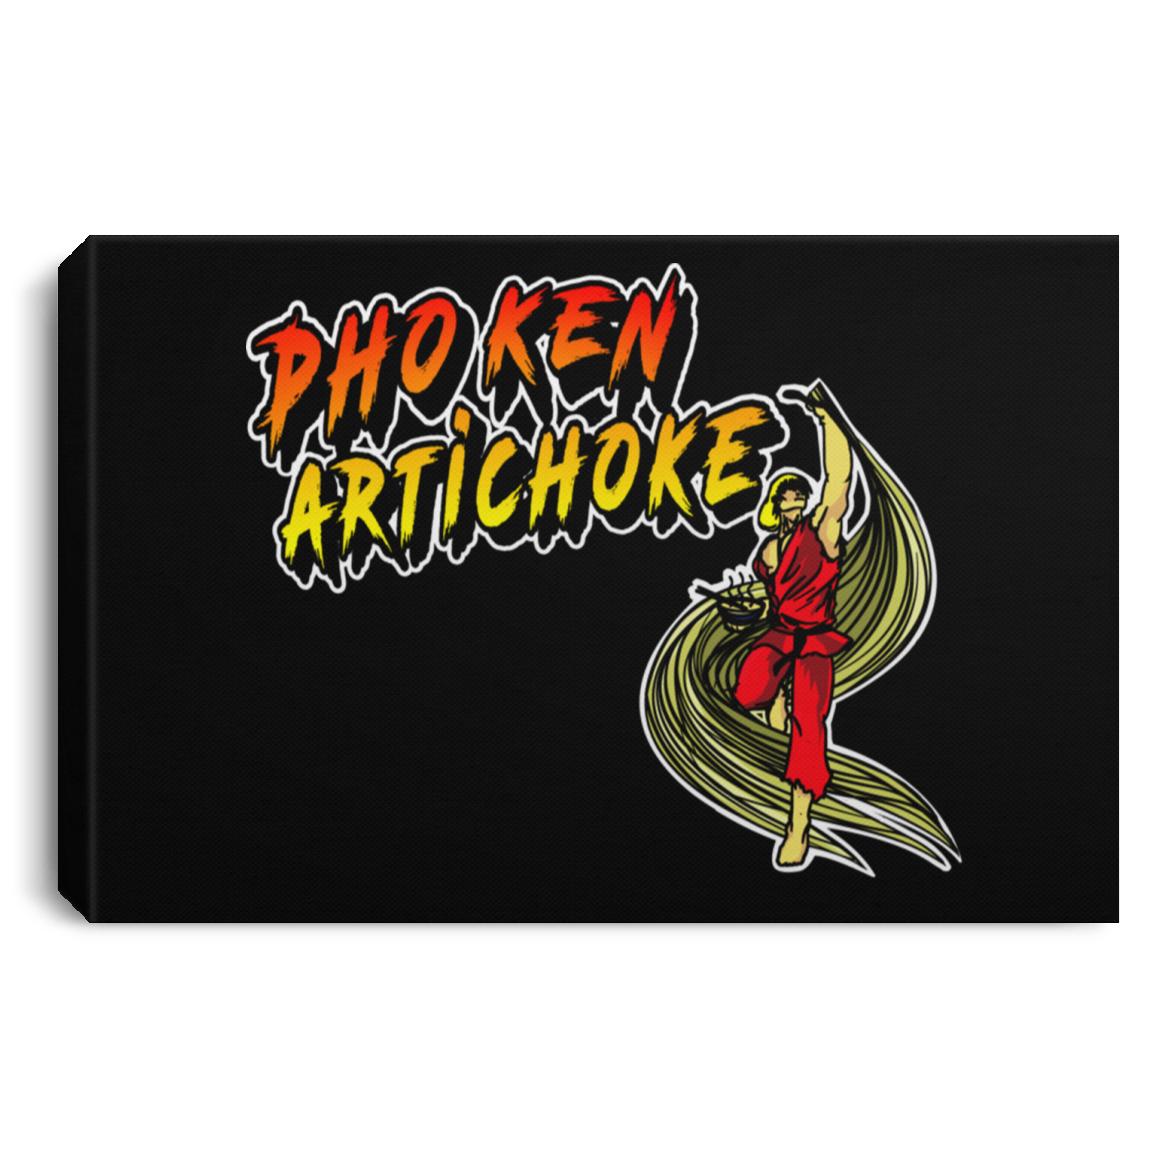 ArtichokeUSA Custom Design. Pho Ken Artichoke. Street Fighter Parody. Gaming. Landscape Canvas .75in Frame